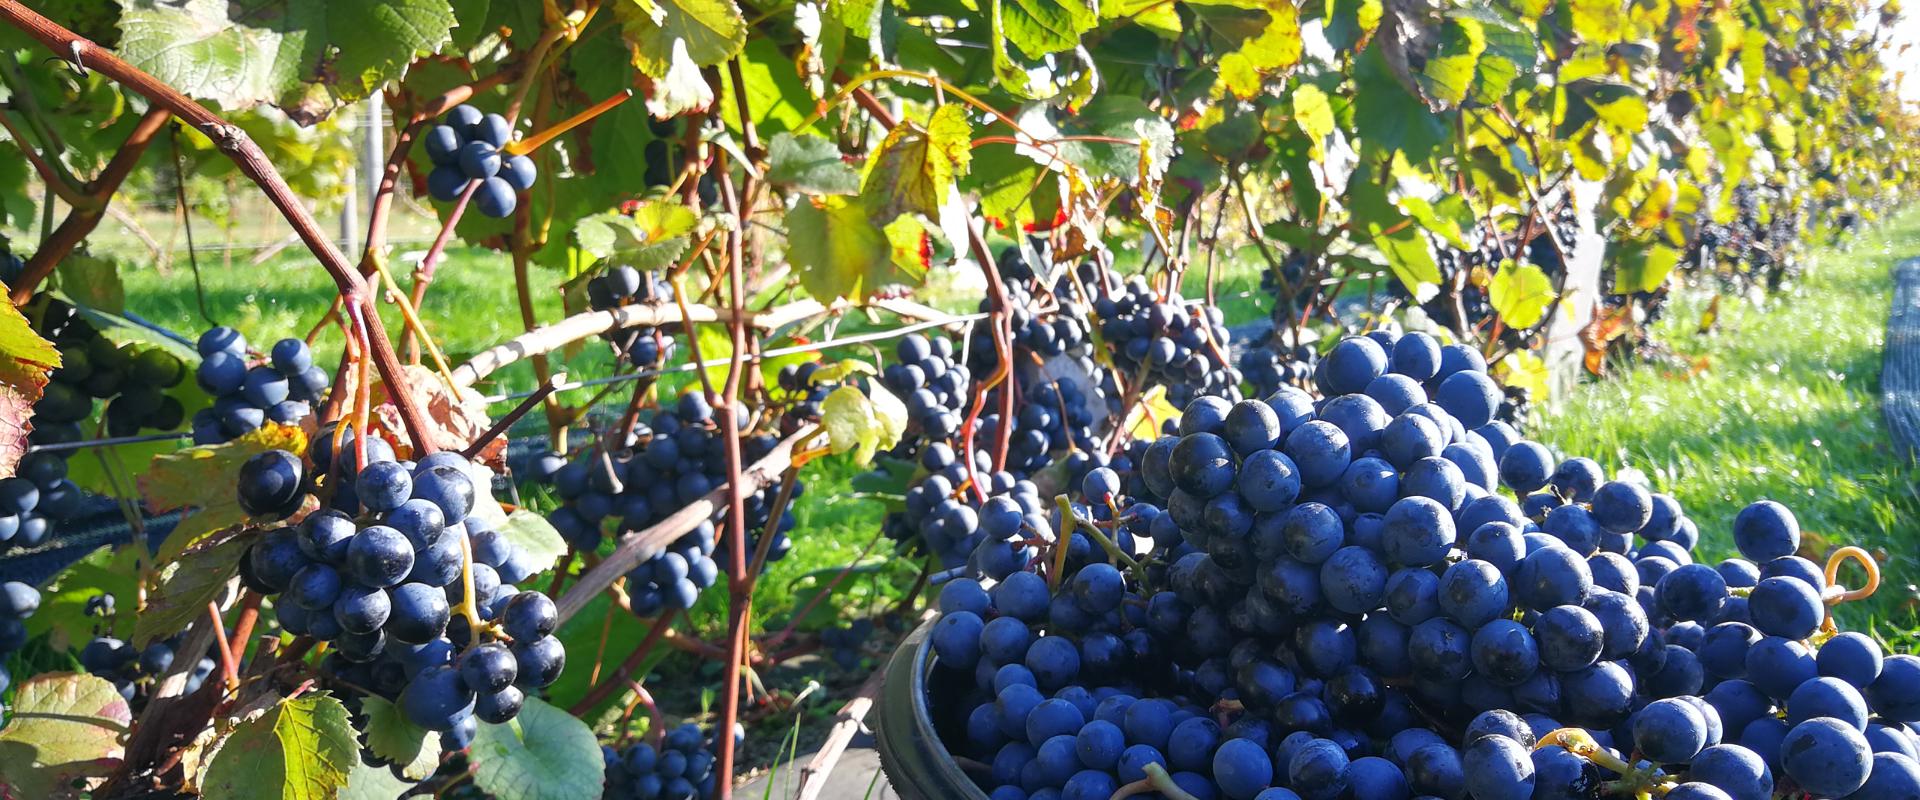 Estonian Wine Route Tour and Tori-Jõesuu Cider and Wine Farm's vineyard